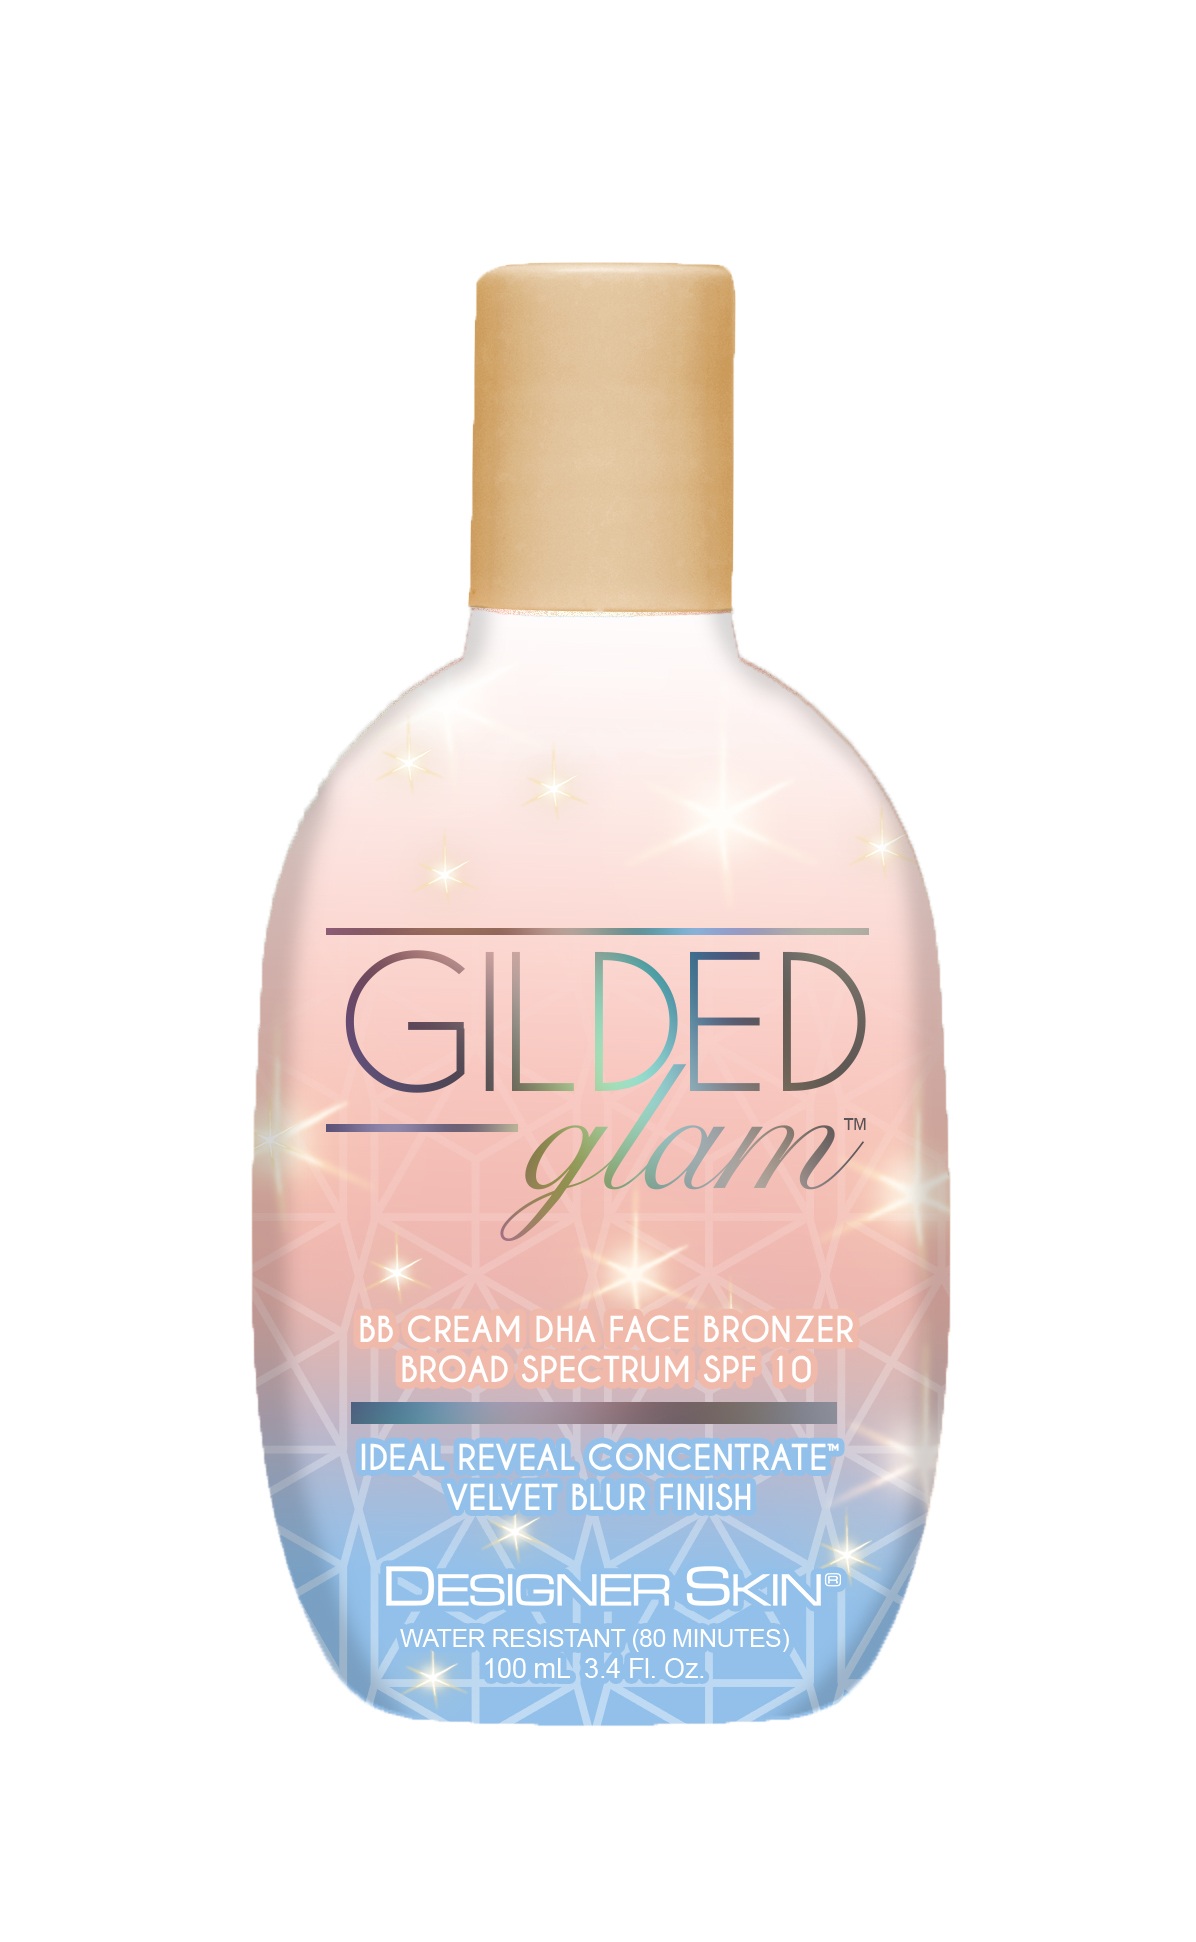 Gilded Glam™ BB Cream DHA Face Bronzer